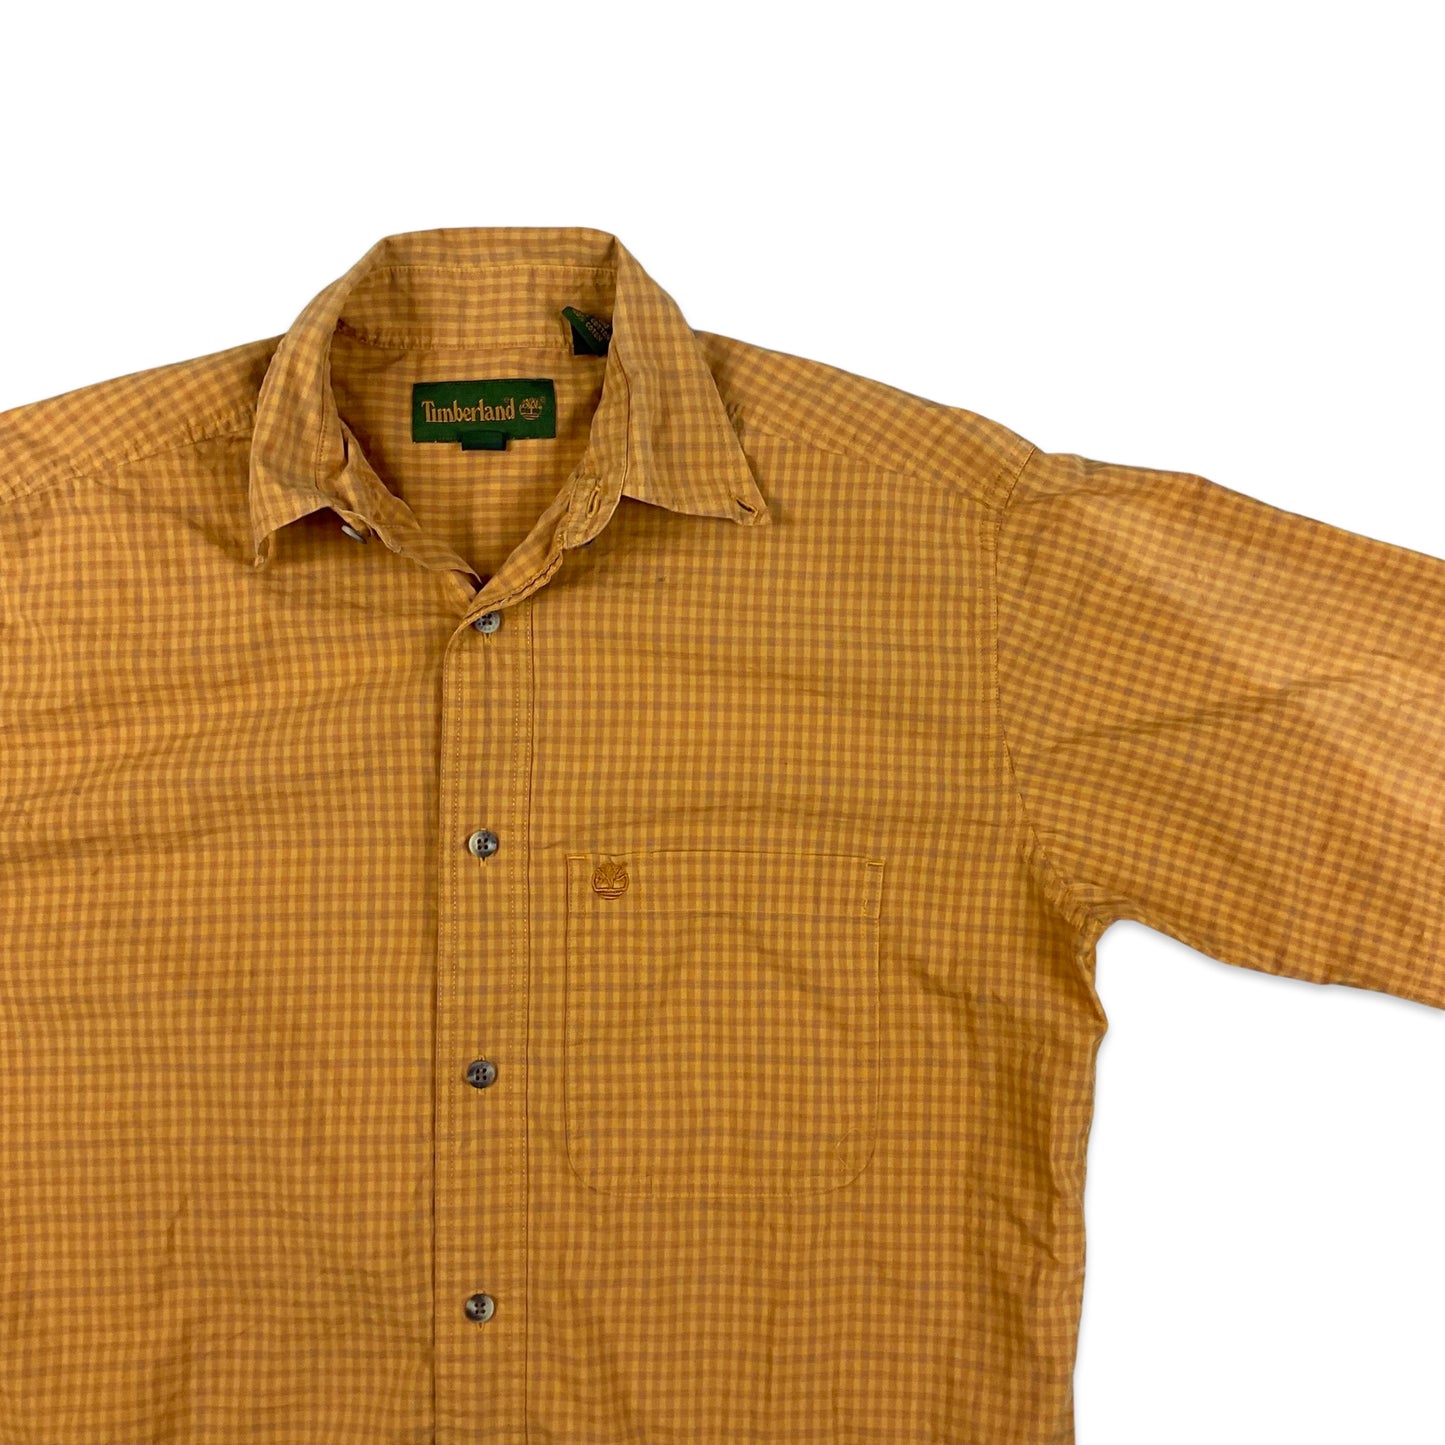 Vintage Timberland Orange Plaid Shirt M L